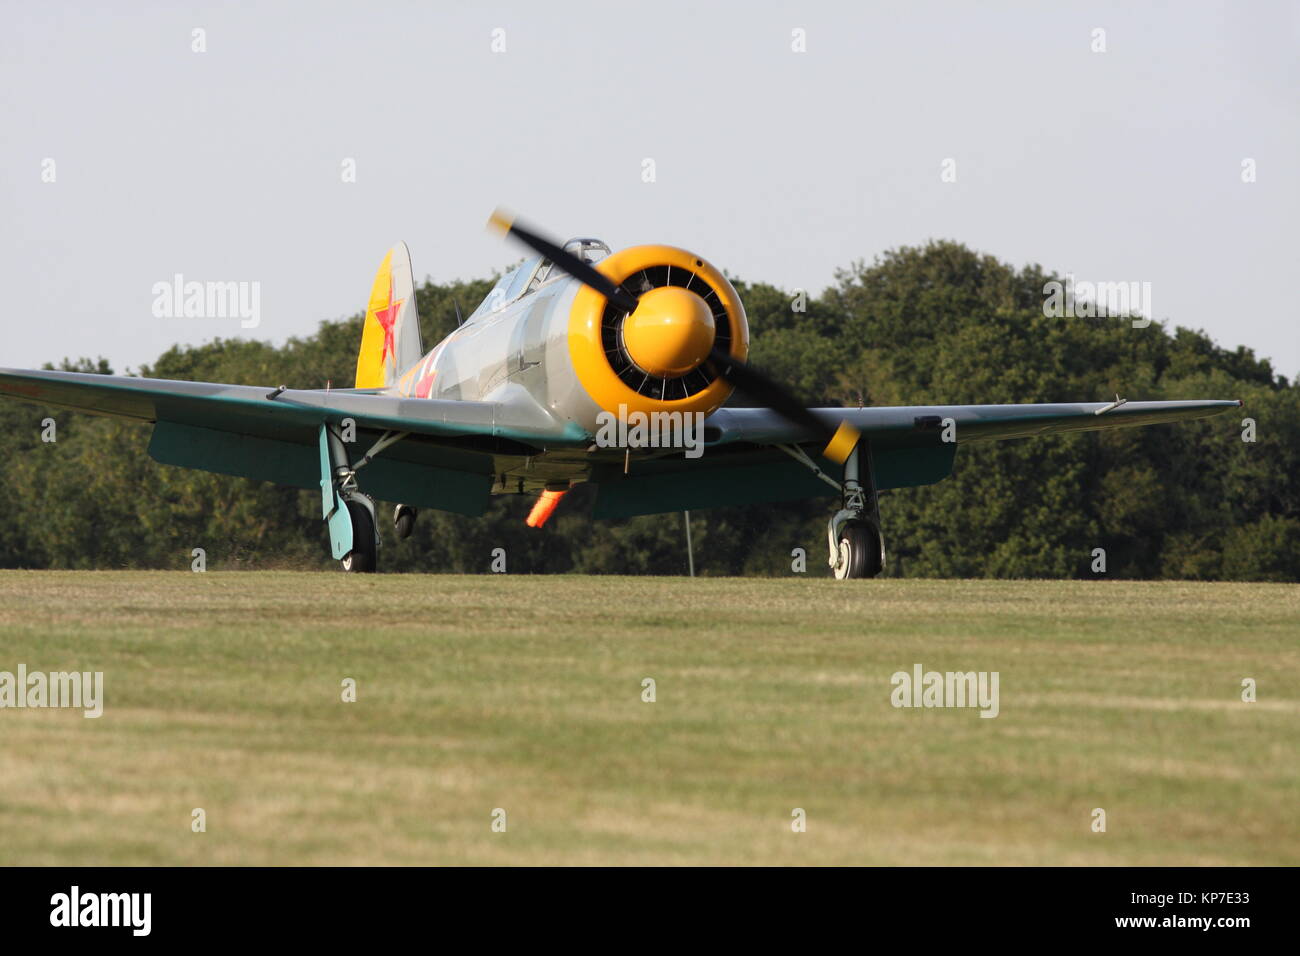 Japanese Yak world war II plane coming in to land on grass runway Stock Photo